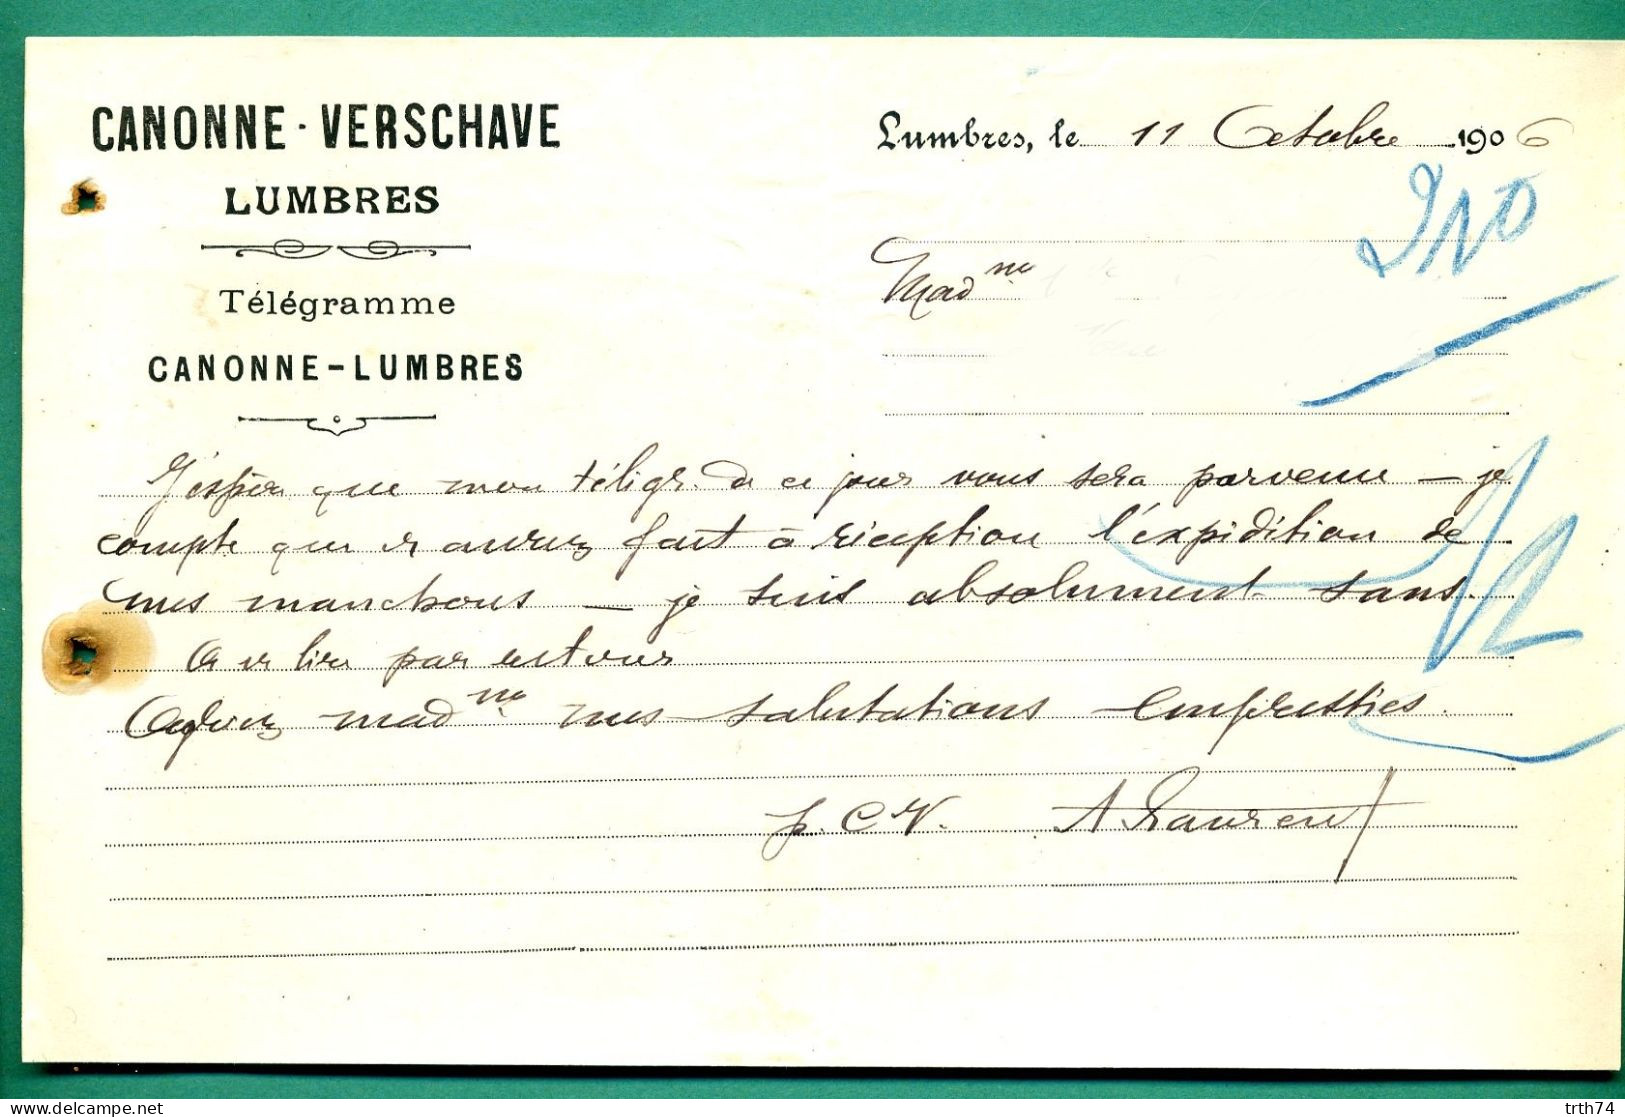 62 Lumbres Canonne Verschare 11 Octobre 1906 - Printing & Stationeries